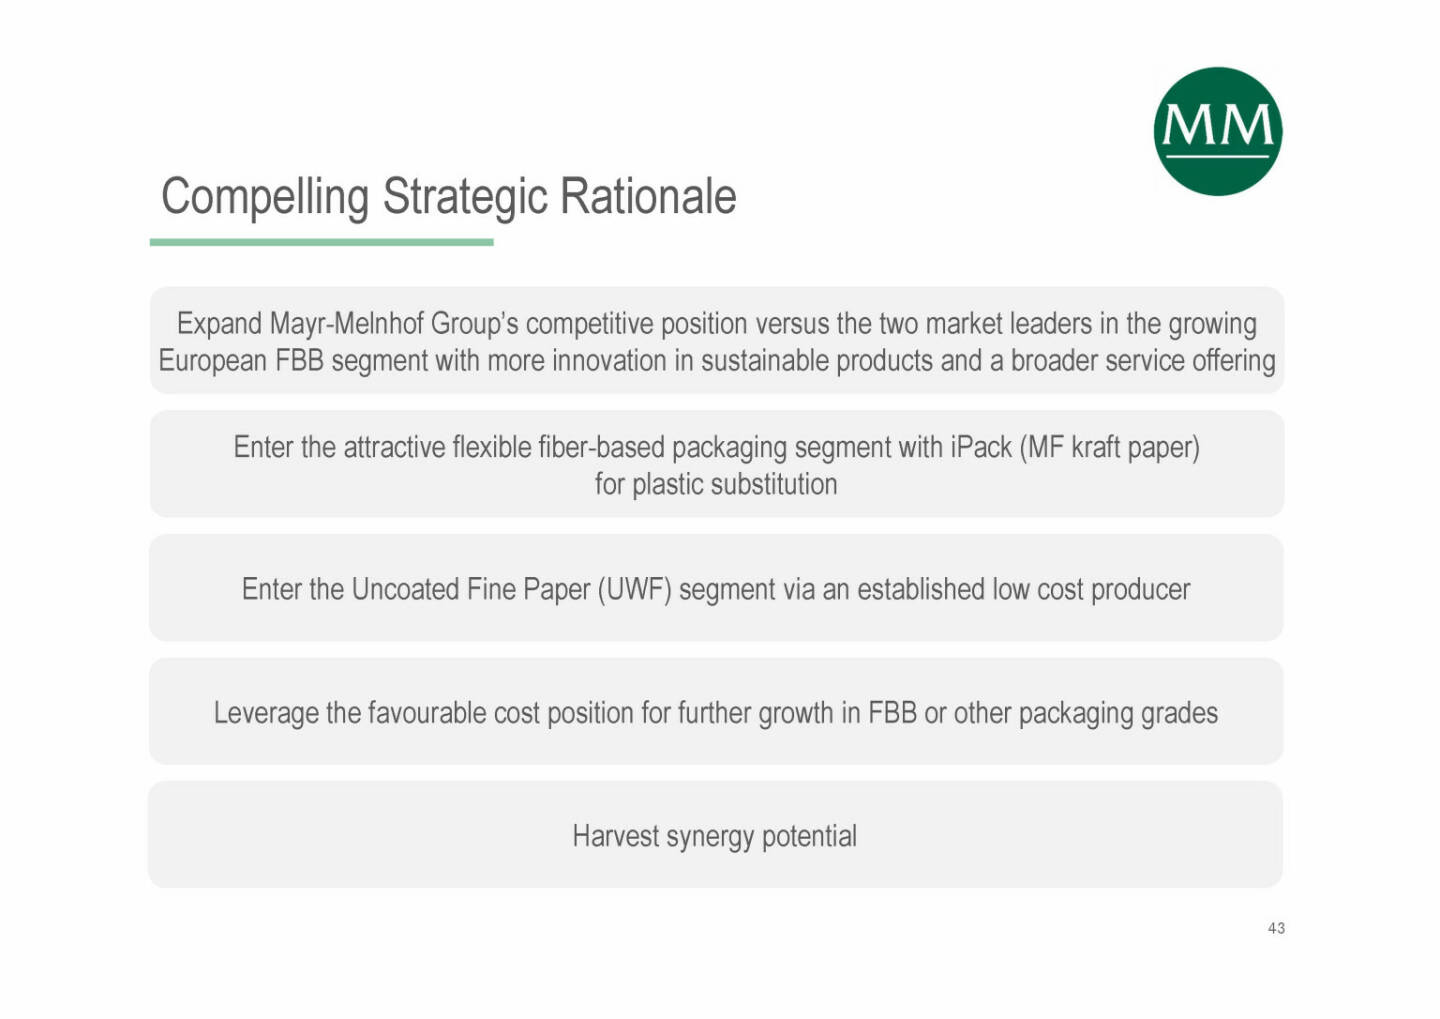 Mayr-Melnhof - Compelling Strategic Rationale